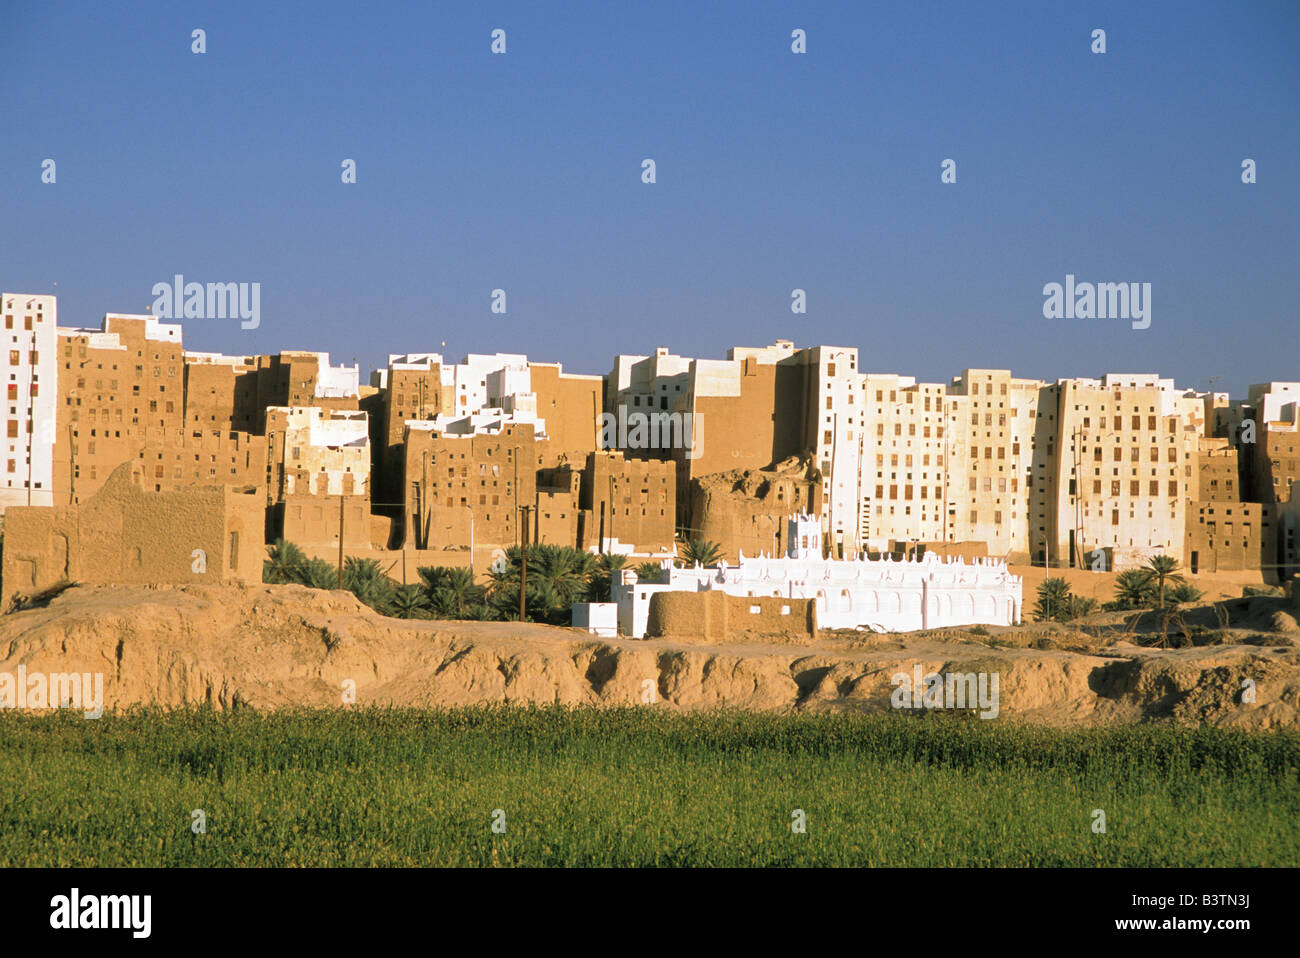 Asia, Yemen, Shibam. Manhattan del deserto Foto Stock